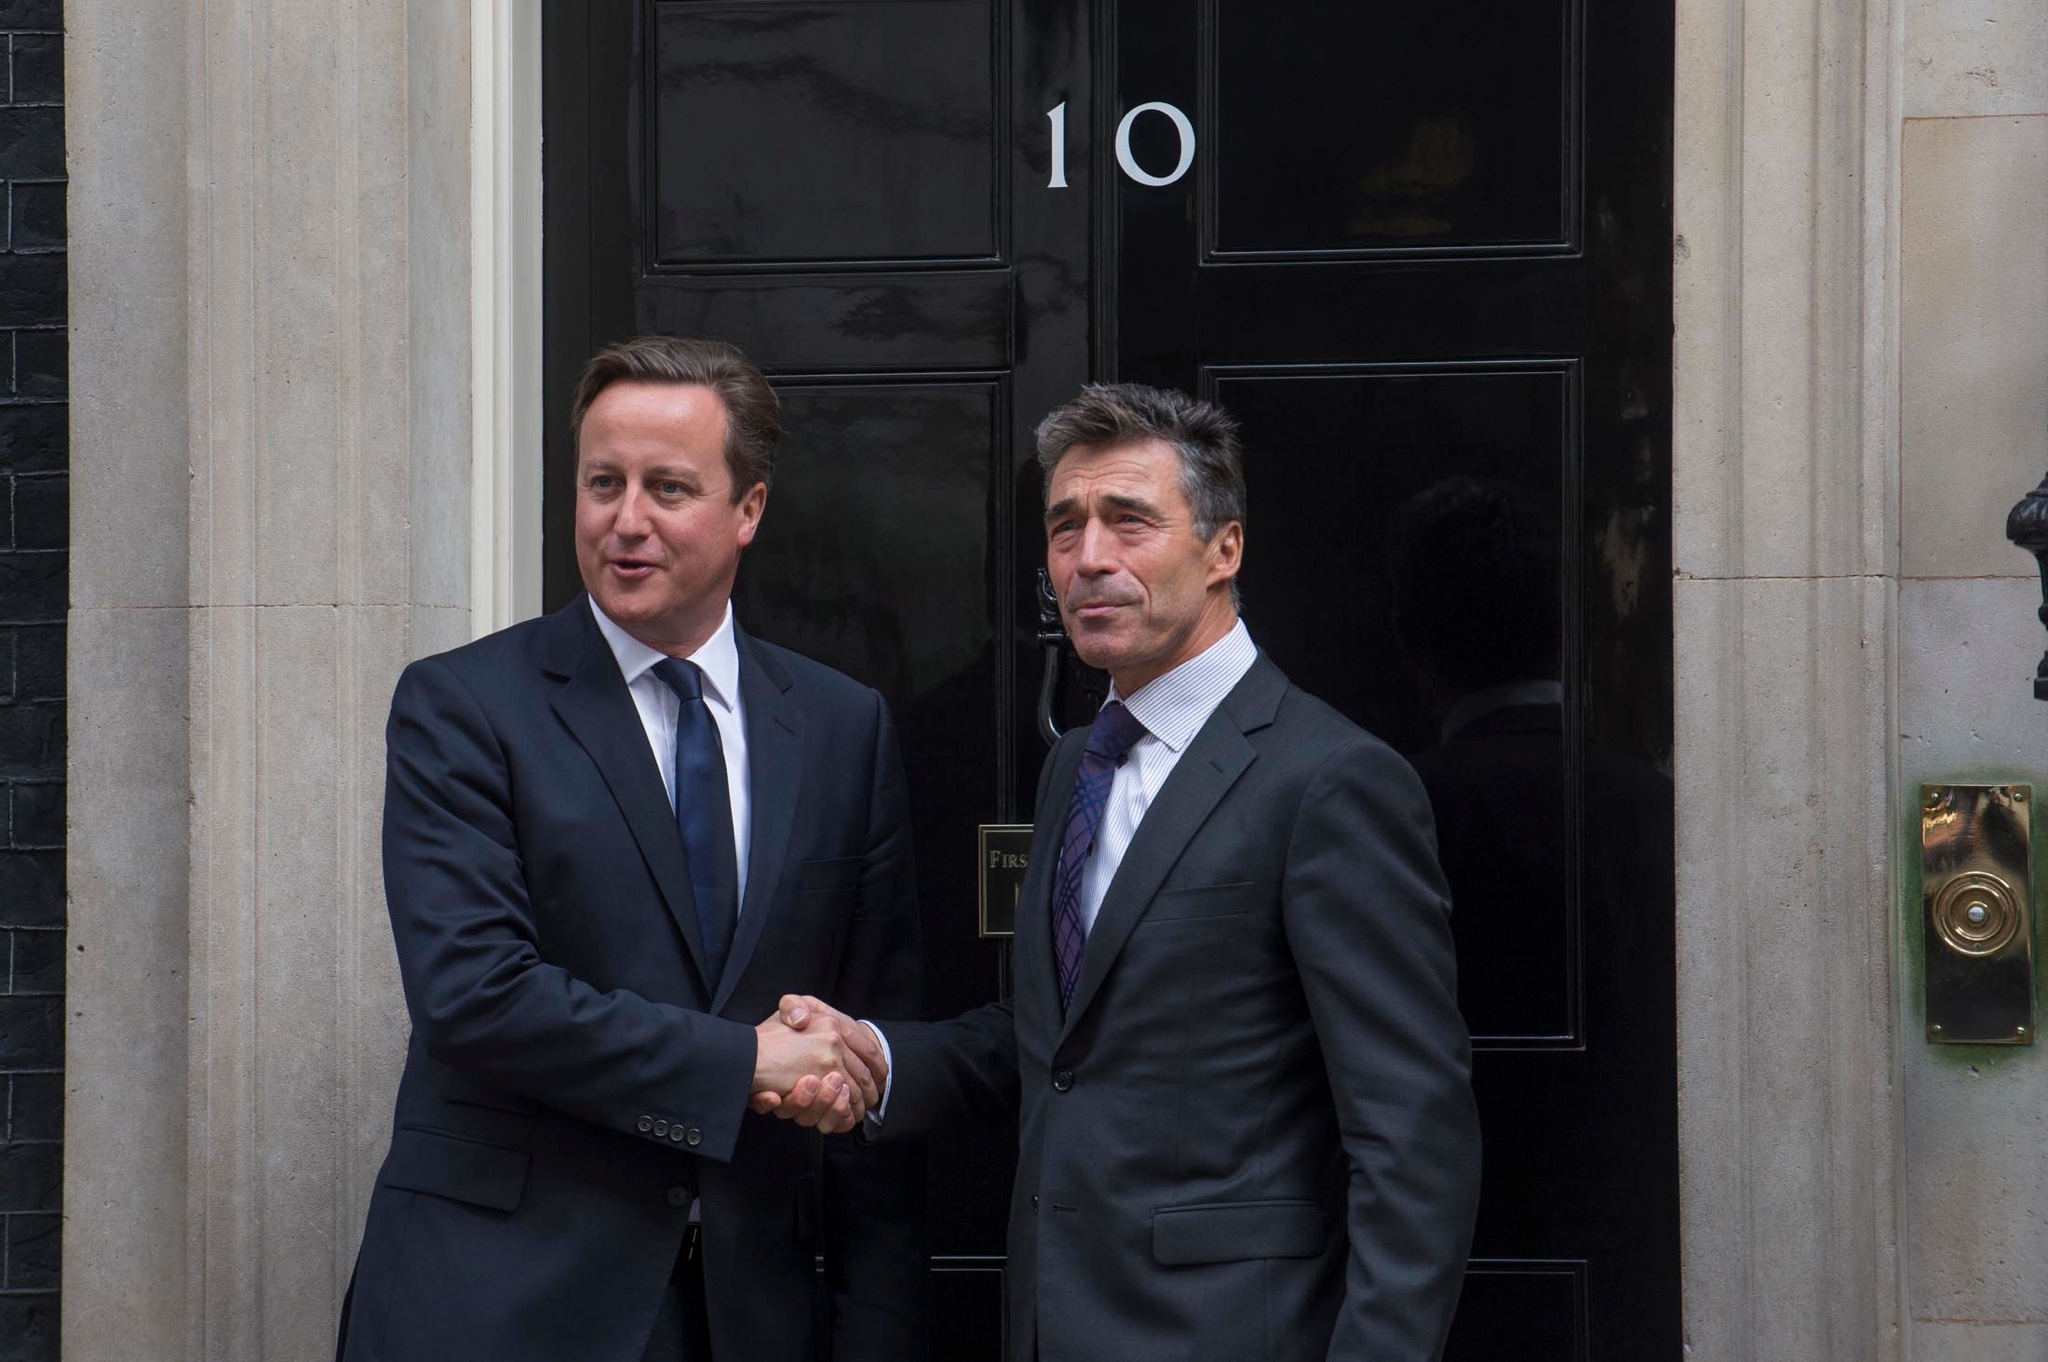 UK Prime Minister David Cameron and NATO Secretary General Anders Fogh Rasmussen, September 18, 2013